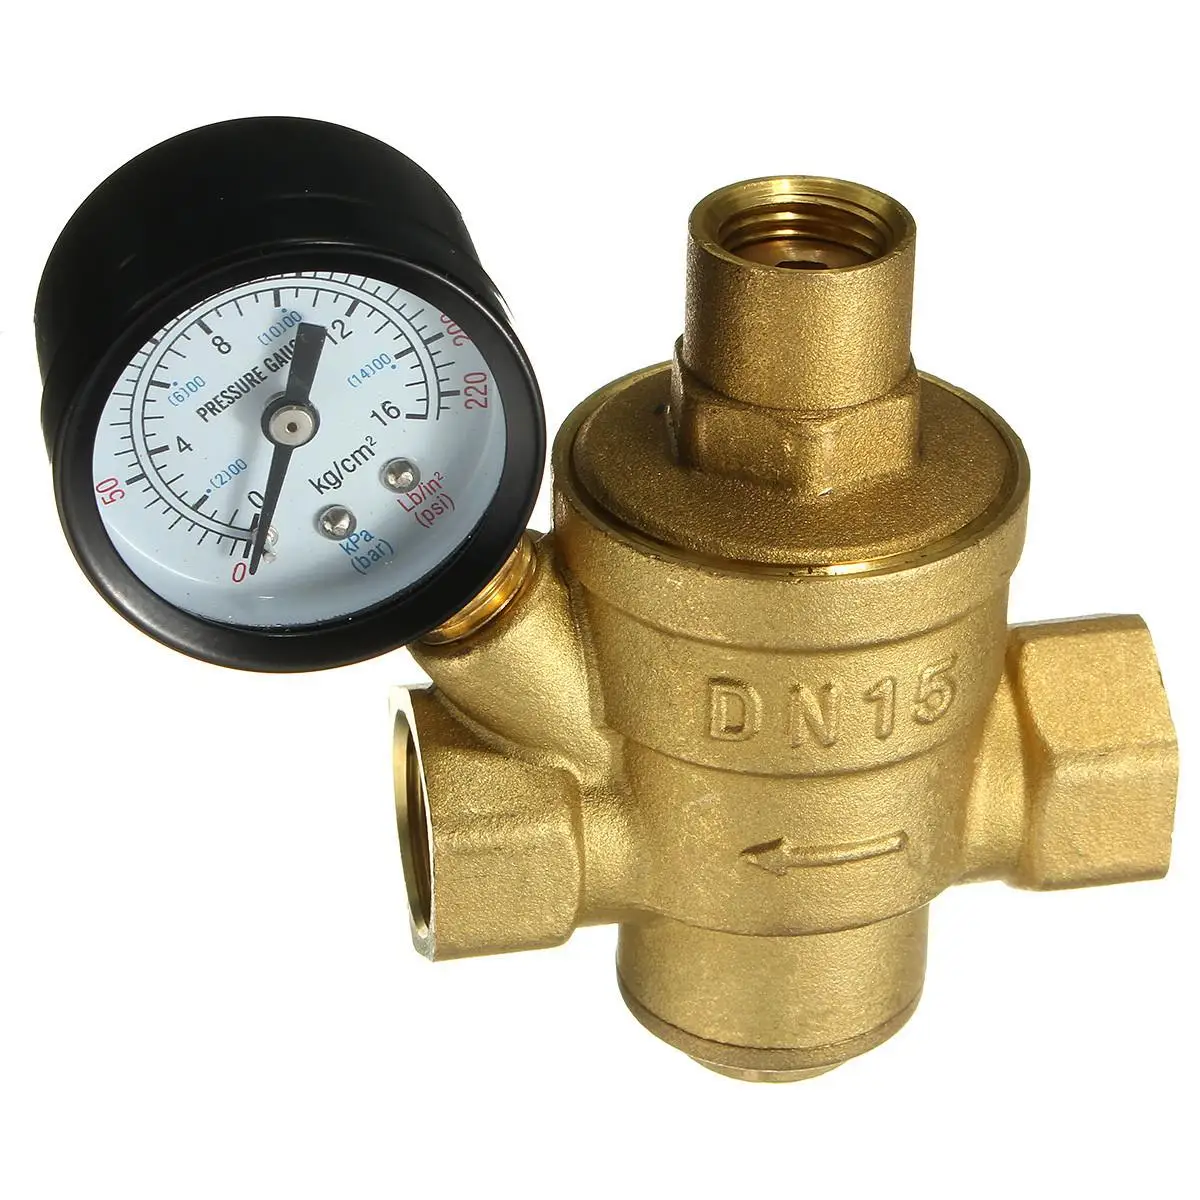 

1/2 DN15 Brass Water Pressure Reducing Maintaining Valves Regulator Adjustable Relief Valves With Gauge Meter